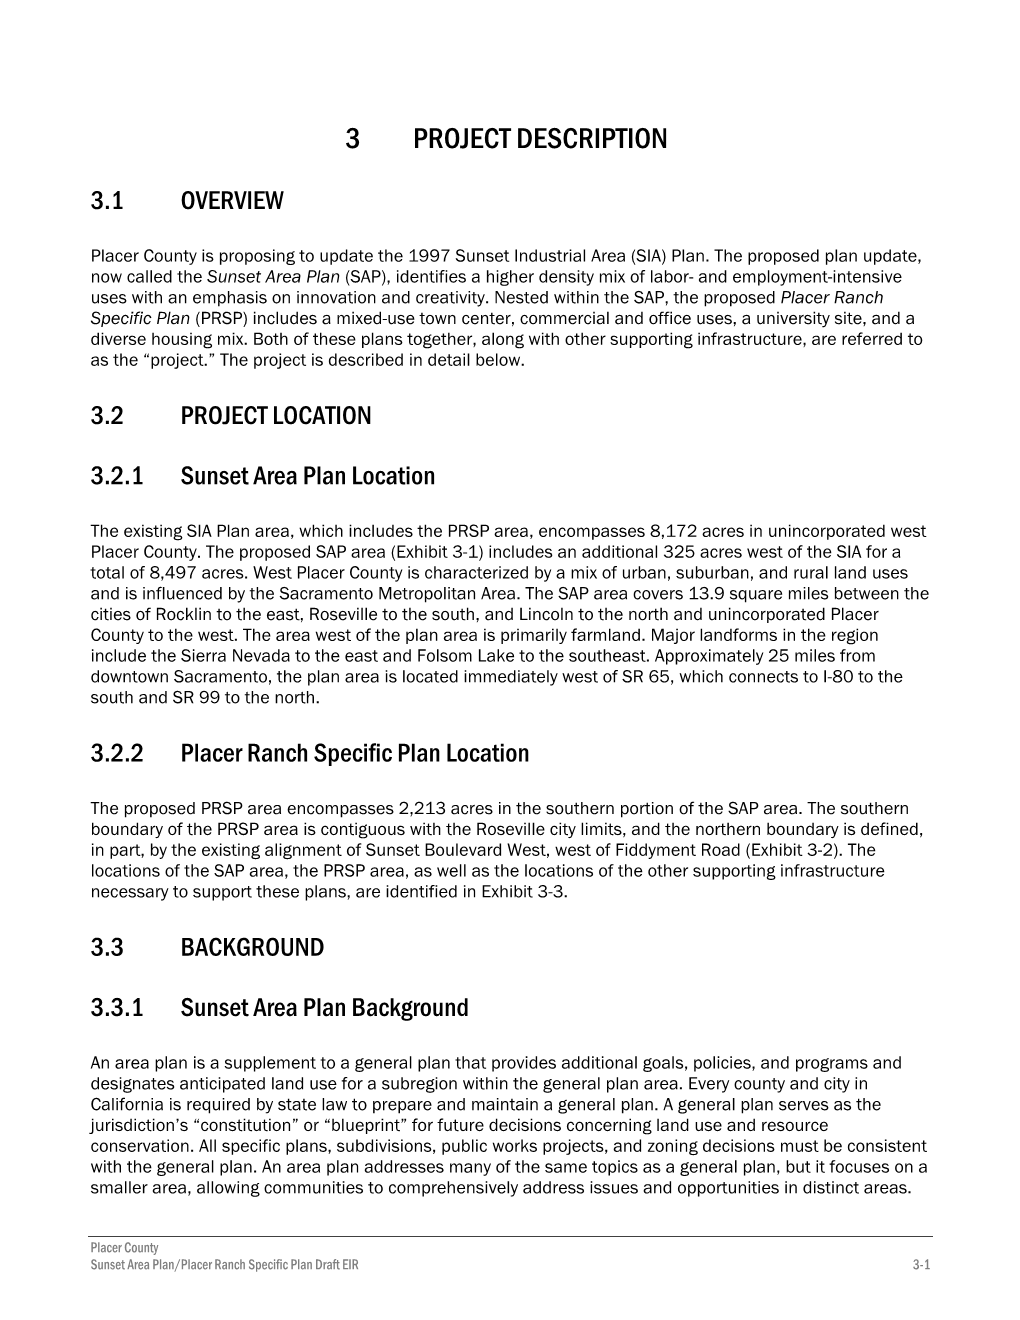 Sunset Area Plan/Placer Ranch Specific Plan Draft EIR 3-1 Project Description Ascent Environmental